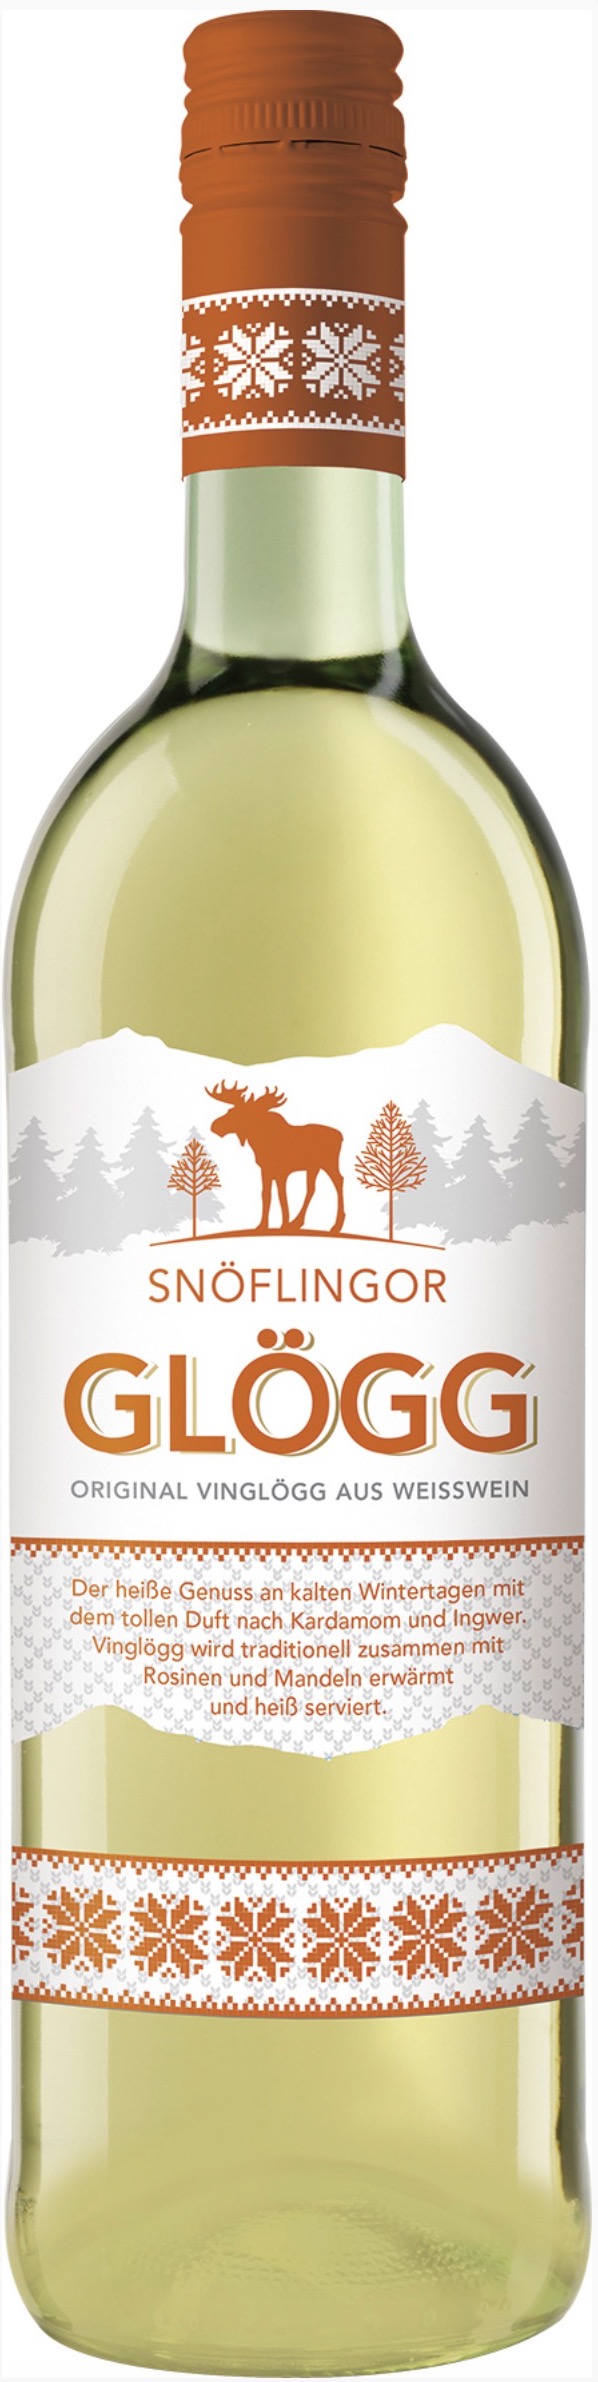 Snöflingor Glögg Glühwein Weiss 10,5% vol. 0,75L